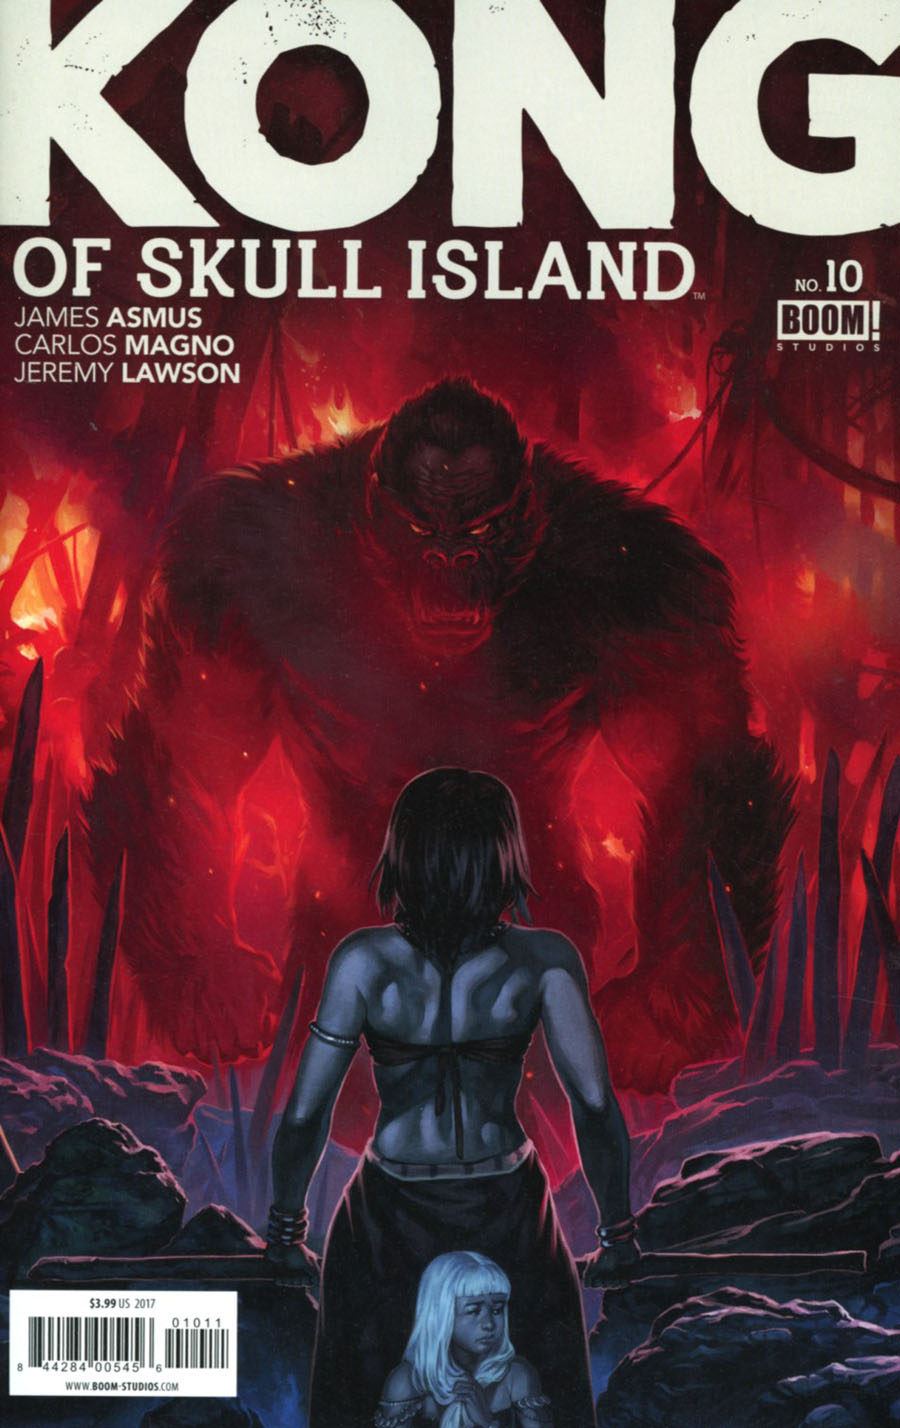 Kong Of Skull Island #10